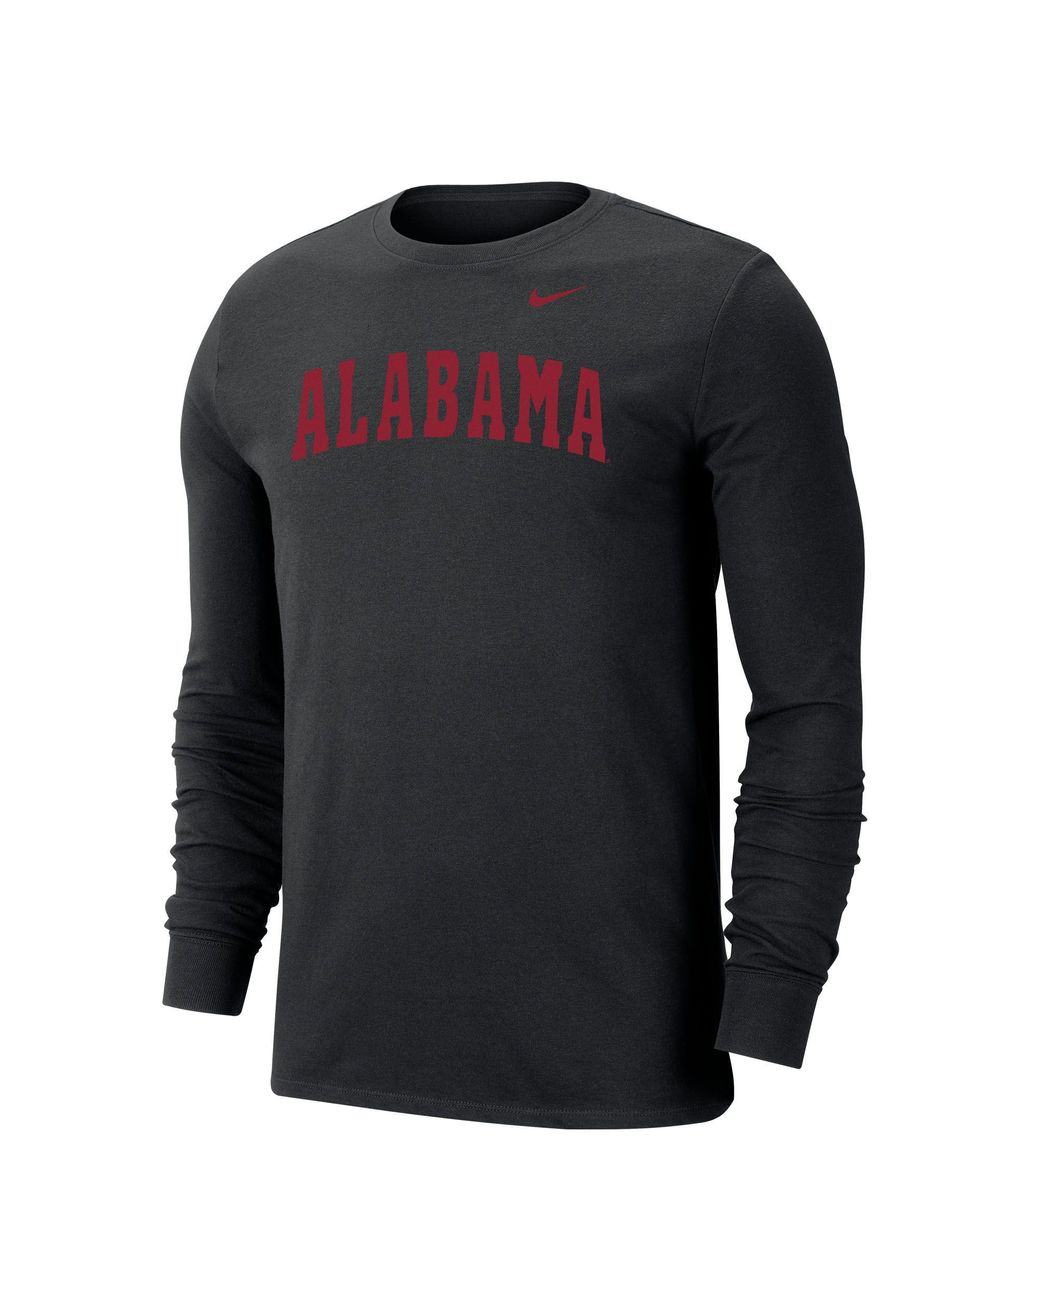 Nike Alabama Crimson Tide Dri-fit Long Sleeve Black T-shirt for Men - Lyst